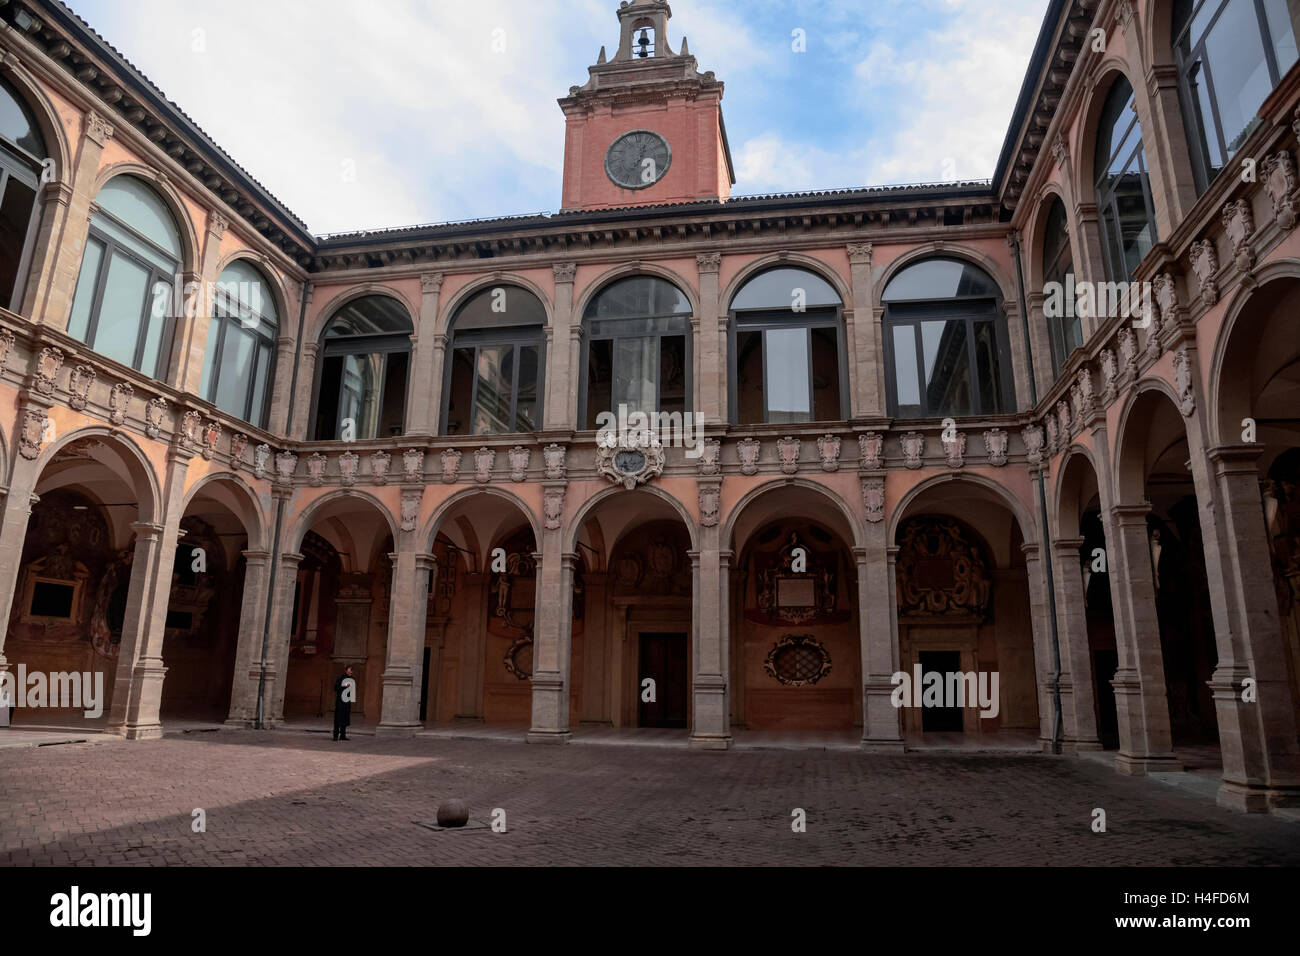 Das Atrium des Archiginnasio, Bologna, Universität Bologna - die erste Universität, die älteste der Welt., Italien, Europa Stockfoto